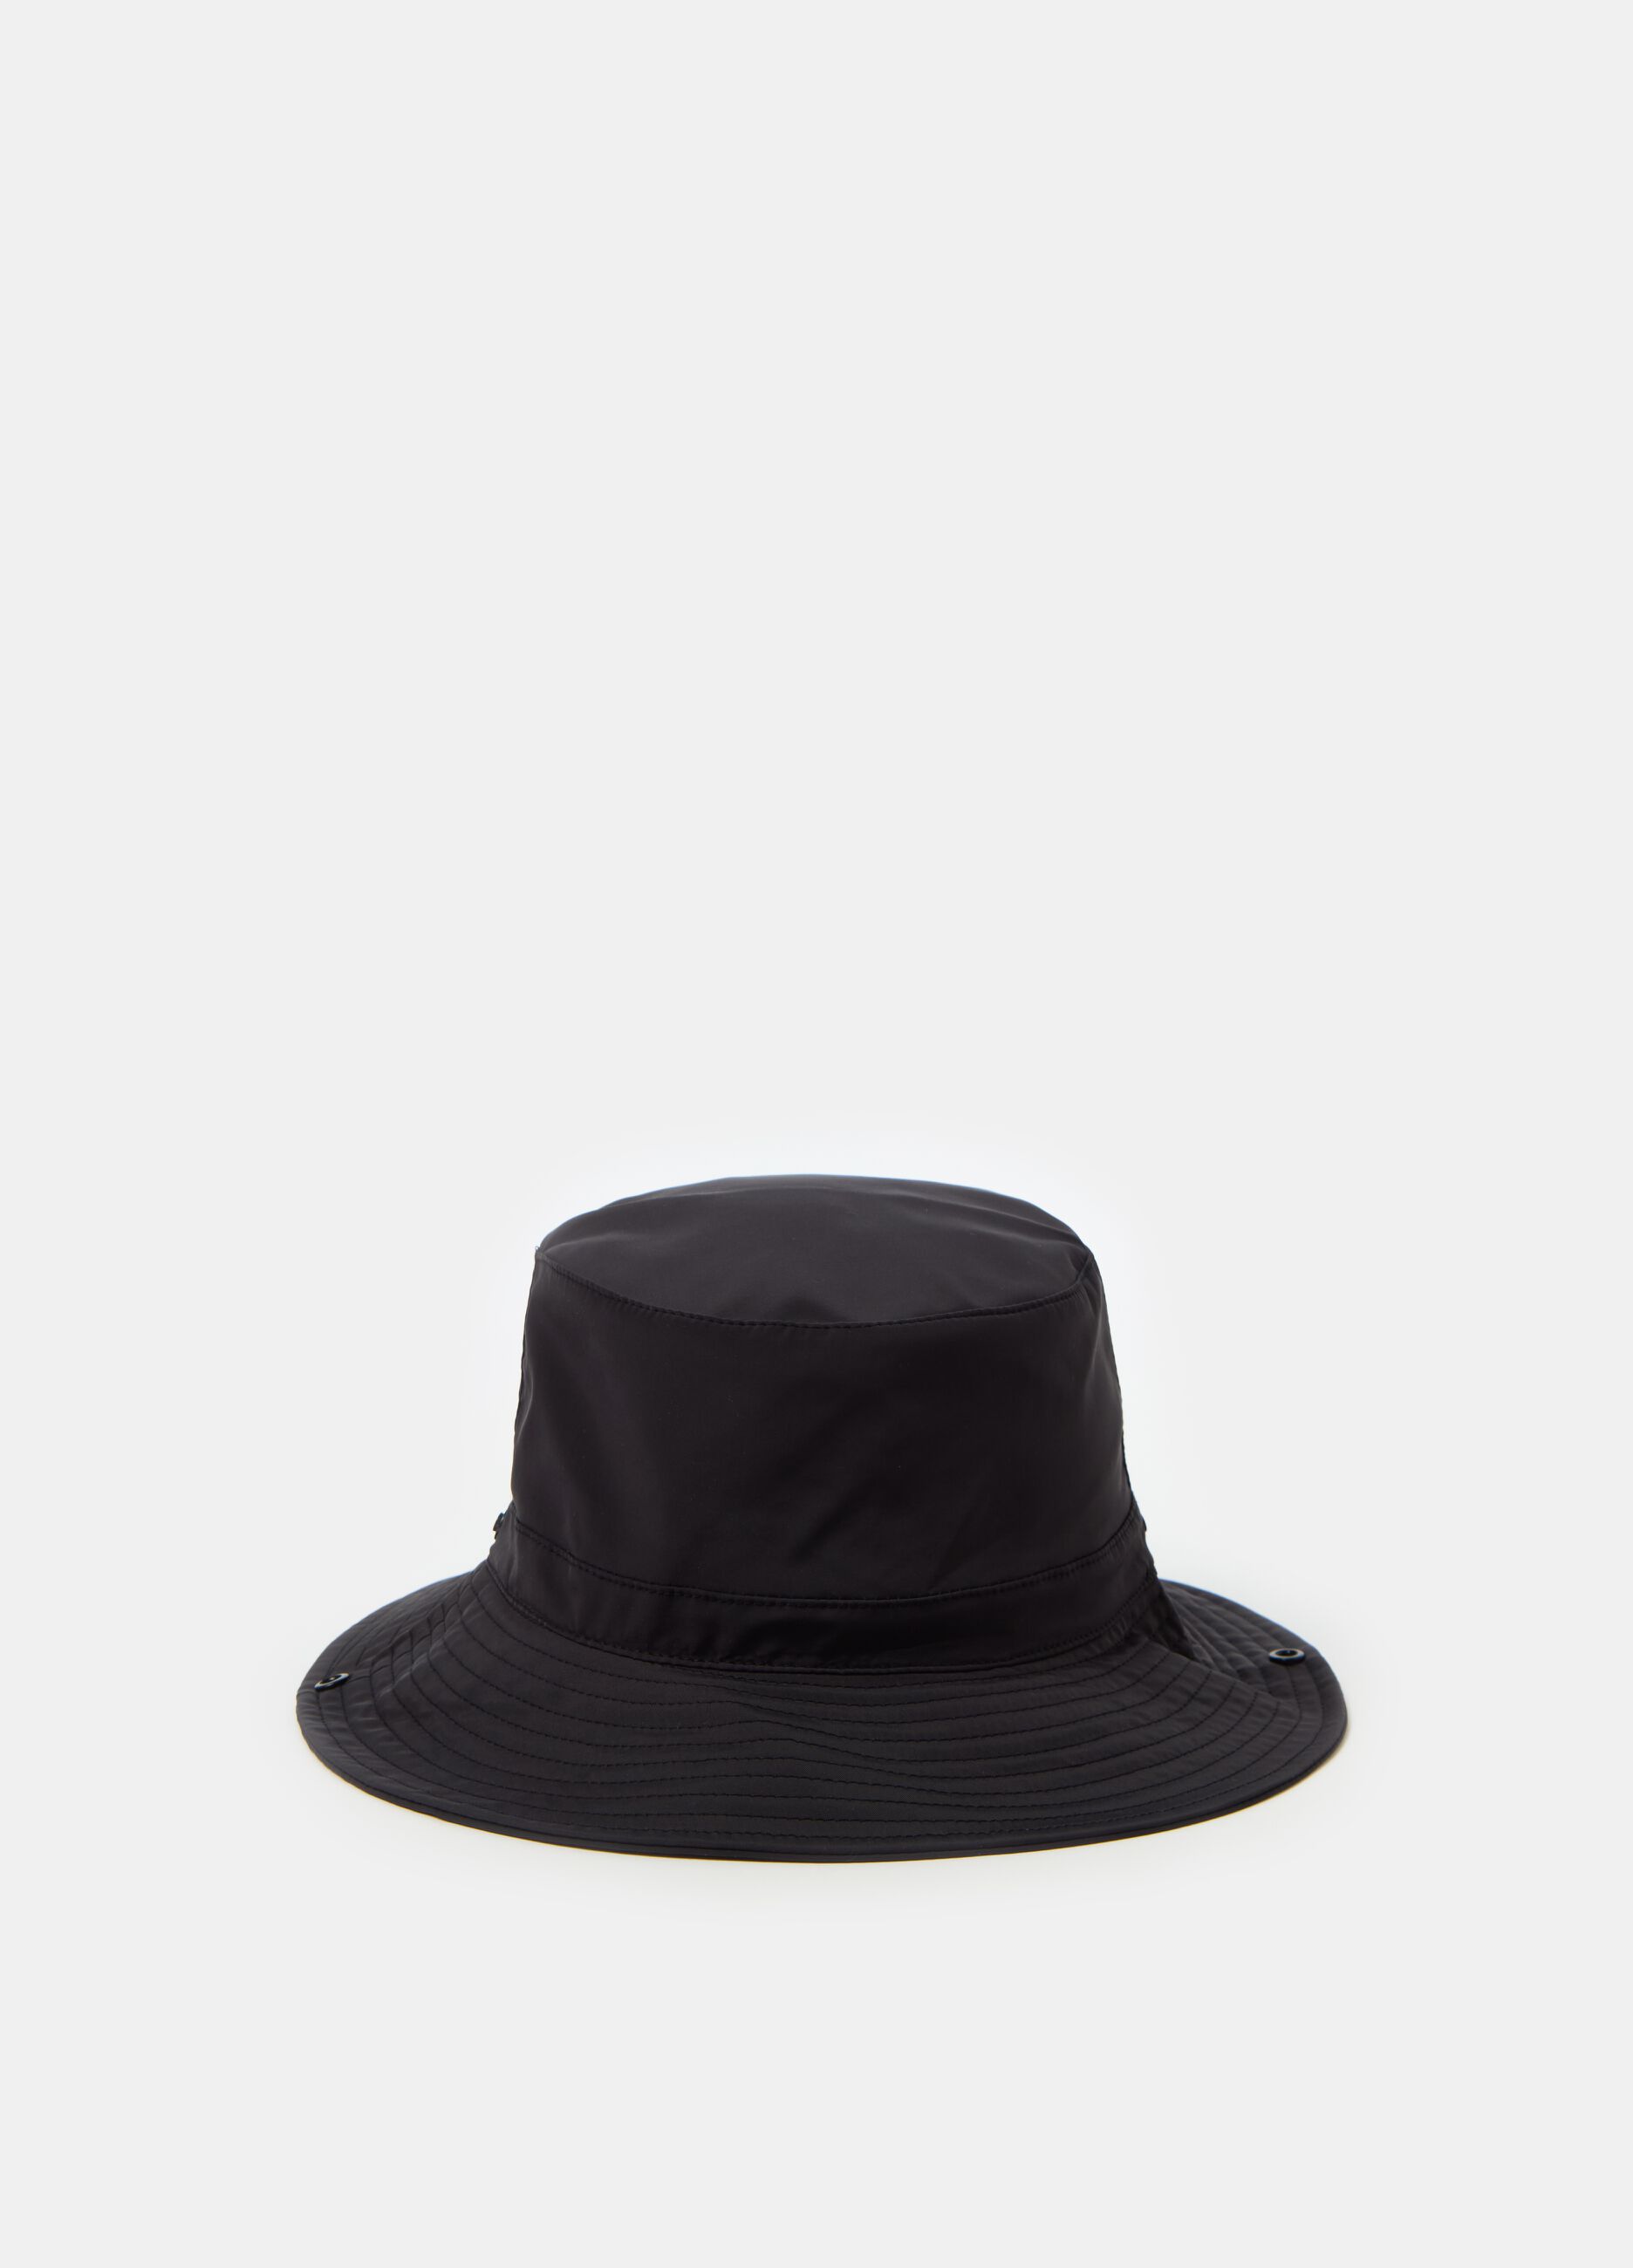 GRAND & HILLS Man's Black Waterproof fishing hat